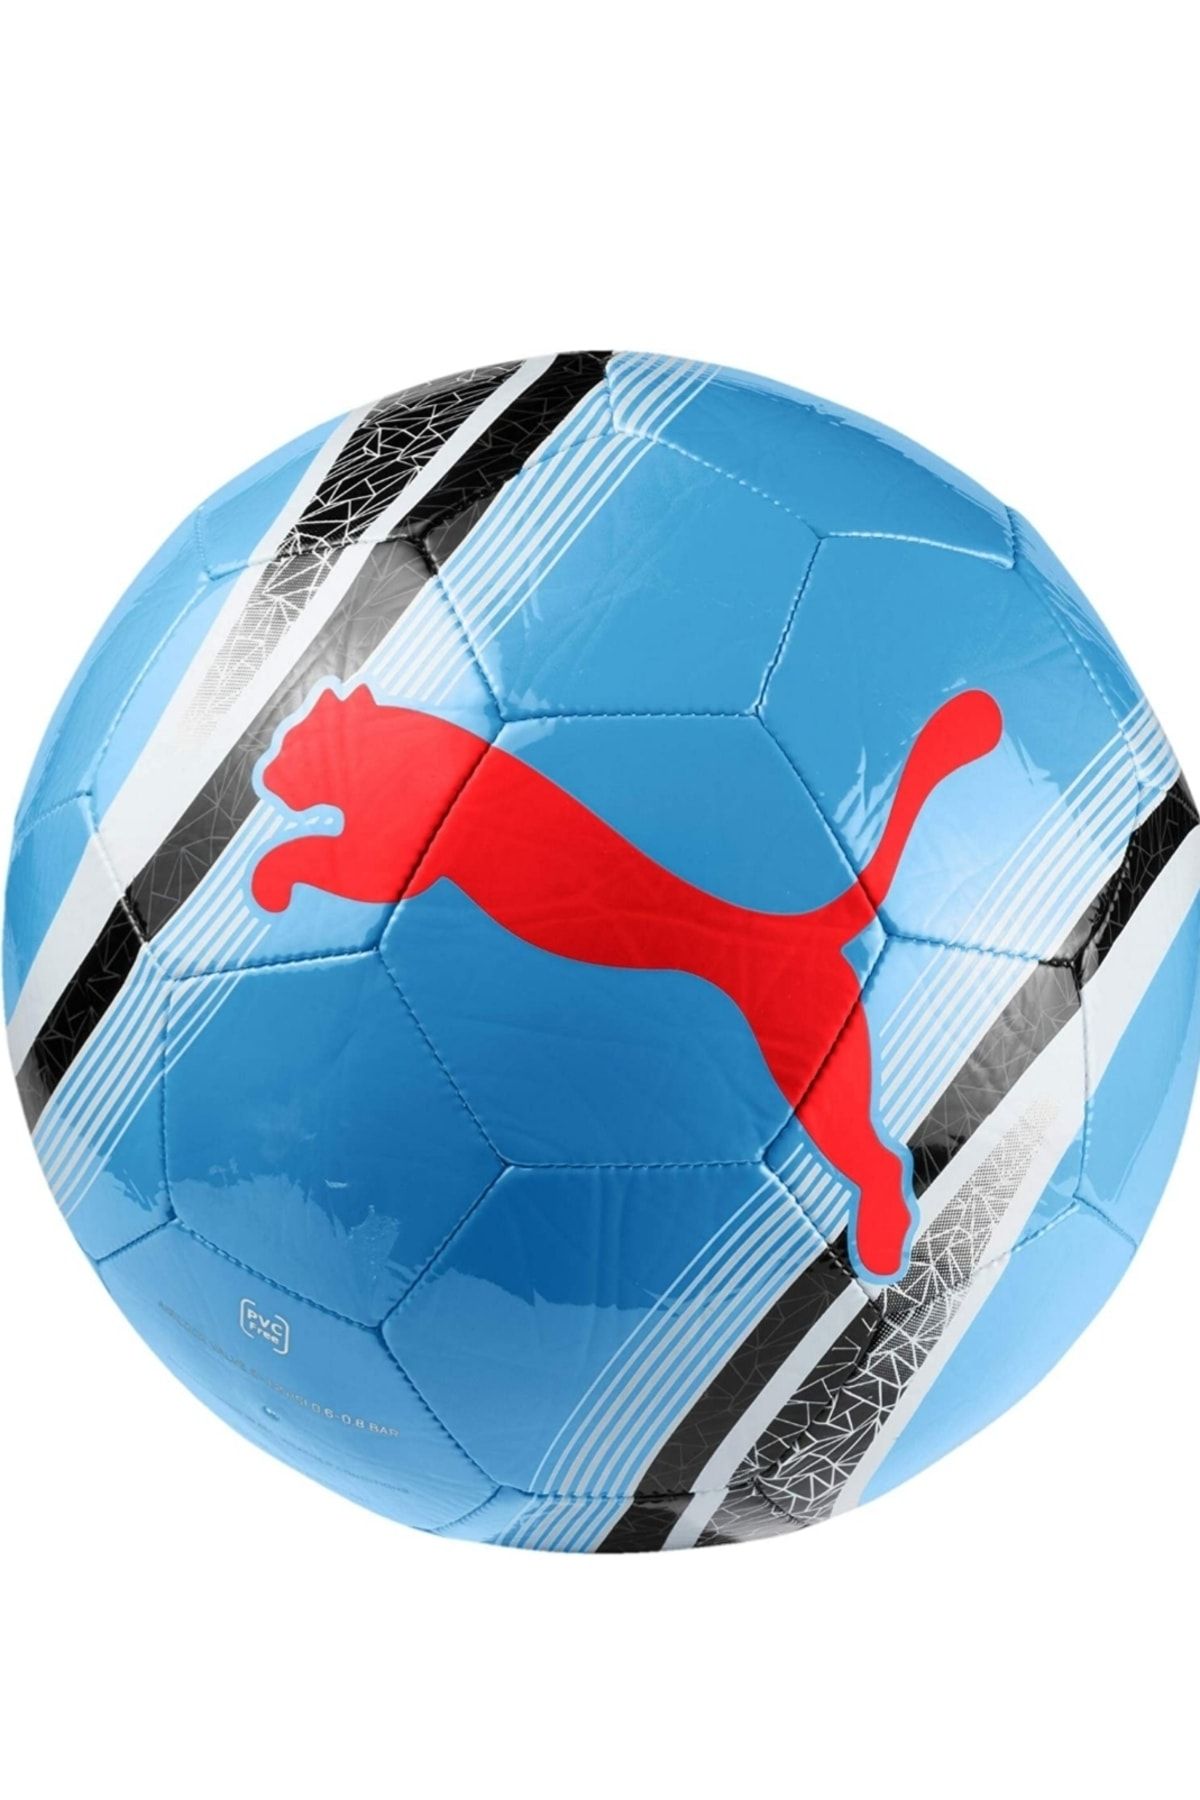 Puma Futbol Big Cat 3 Top Antrenman Topu Mavi Kırmızı Siyah